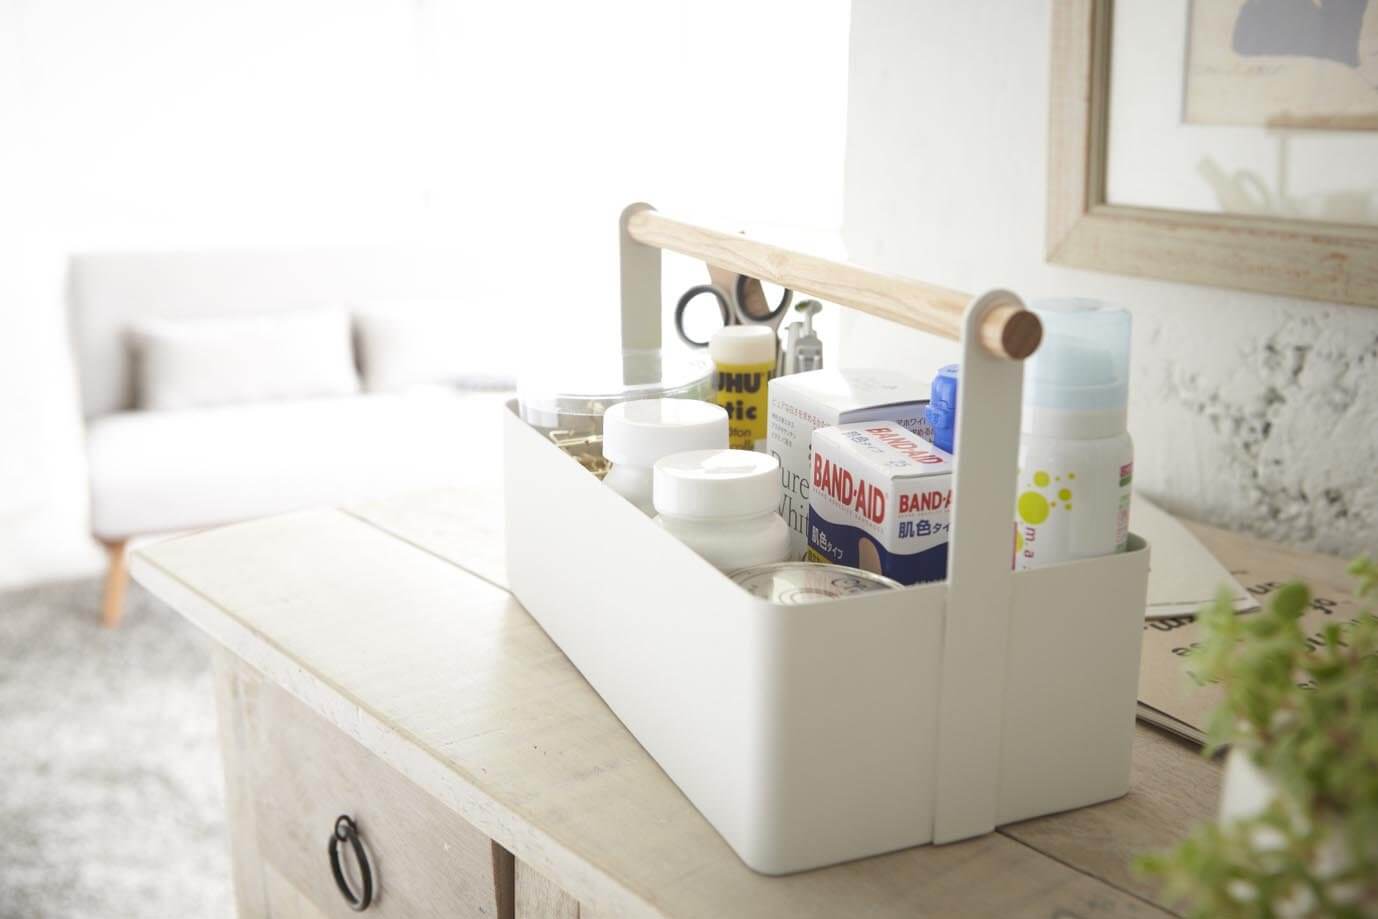 Rectangular white Yamazaki toolbox with wooden handle containing household items, sitting on dresser.